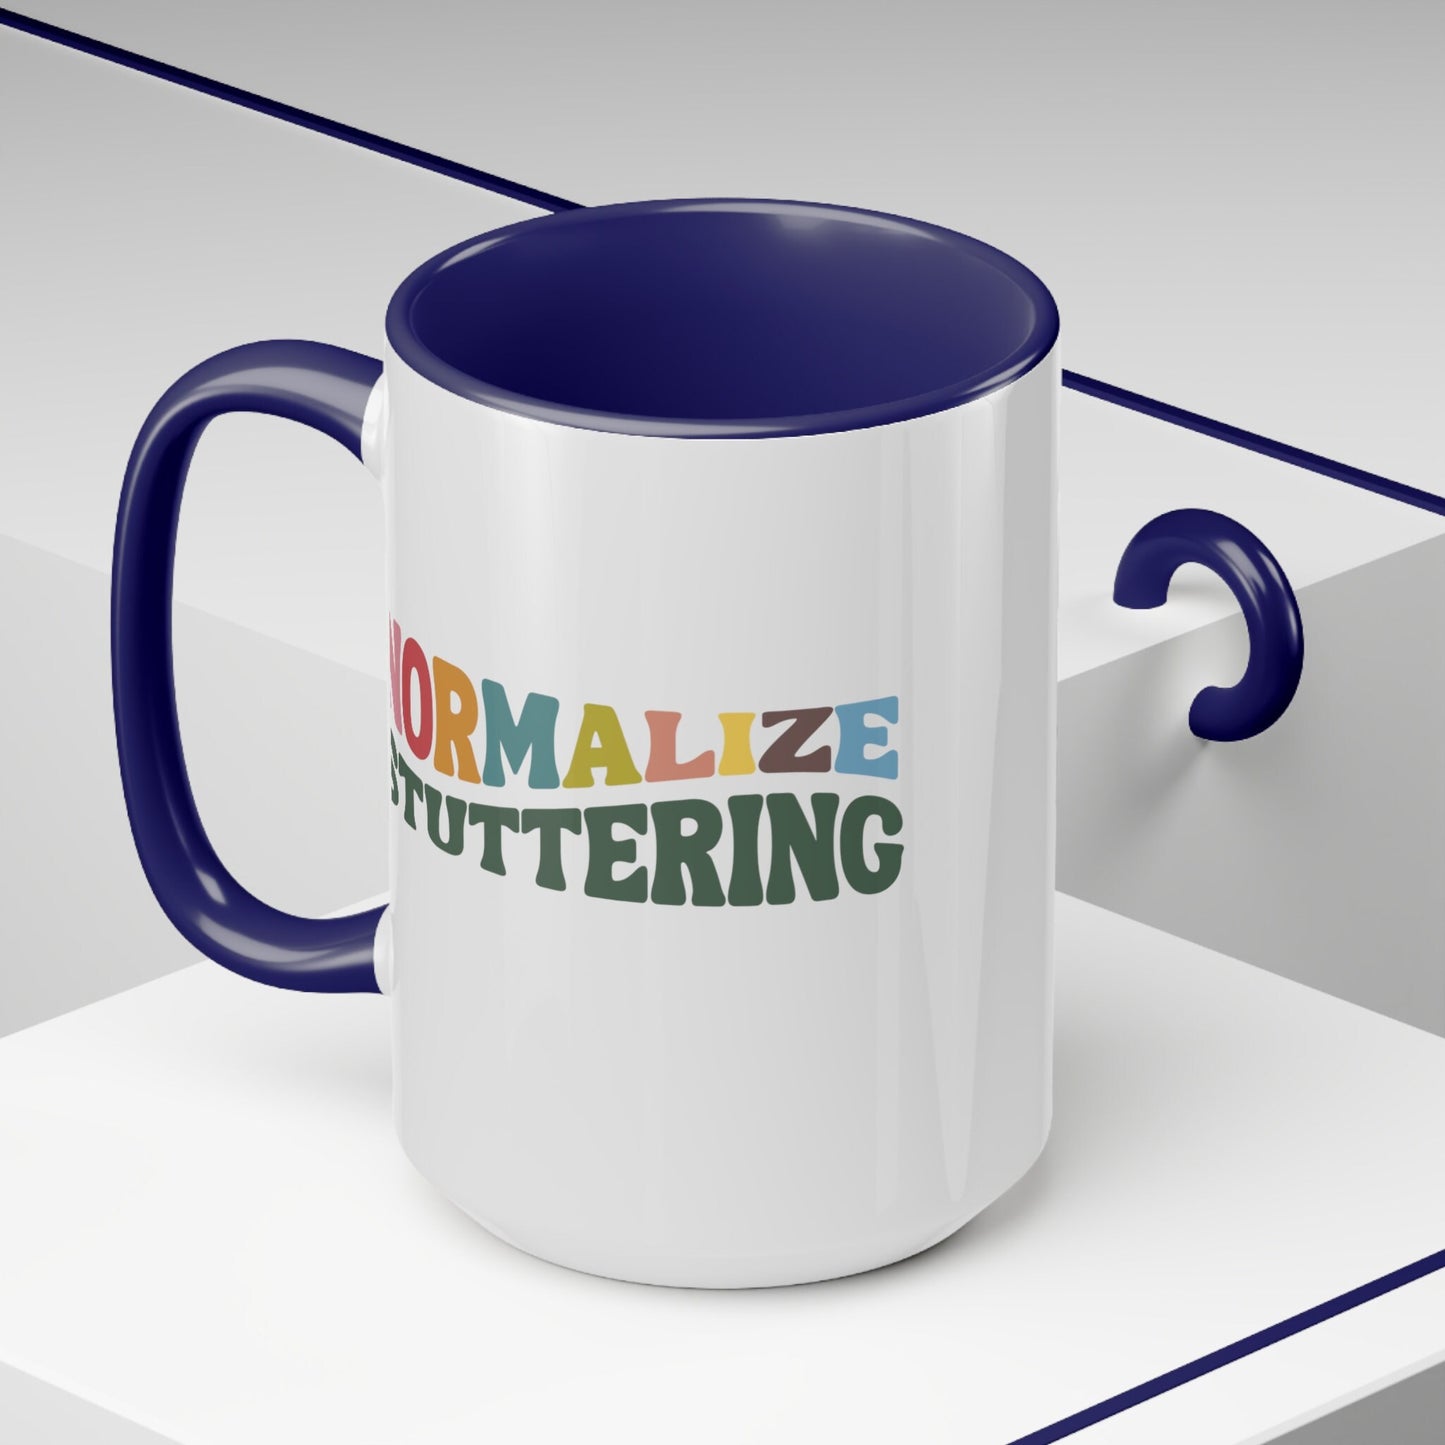 Normalize Stuttering Retro Wave MCM Colors 15oz Two-Tone Mug